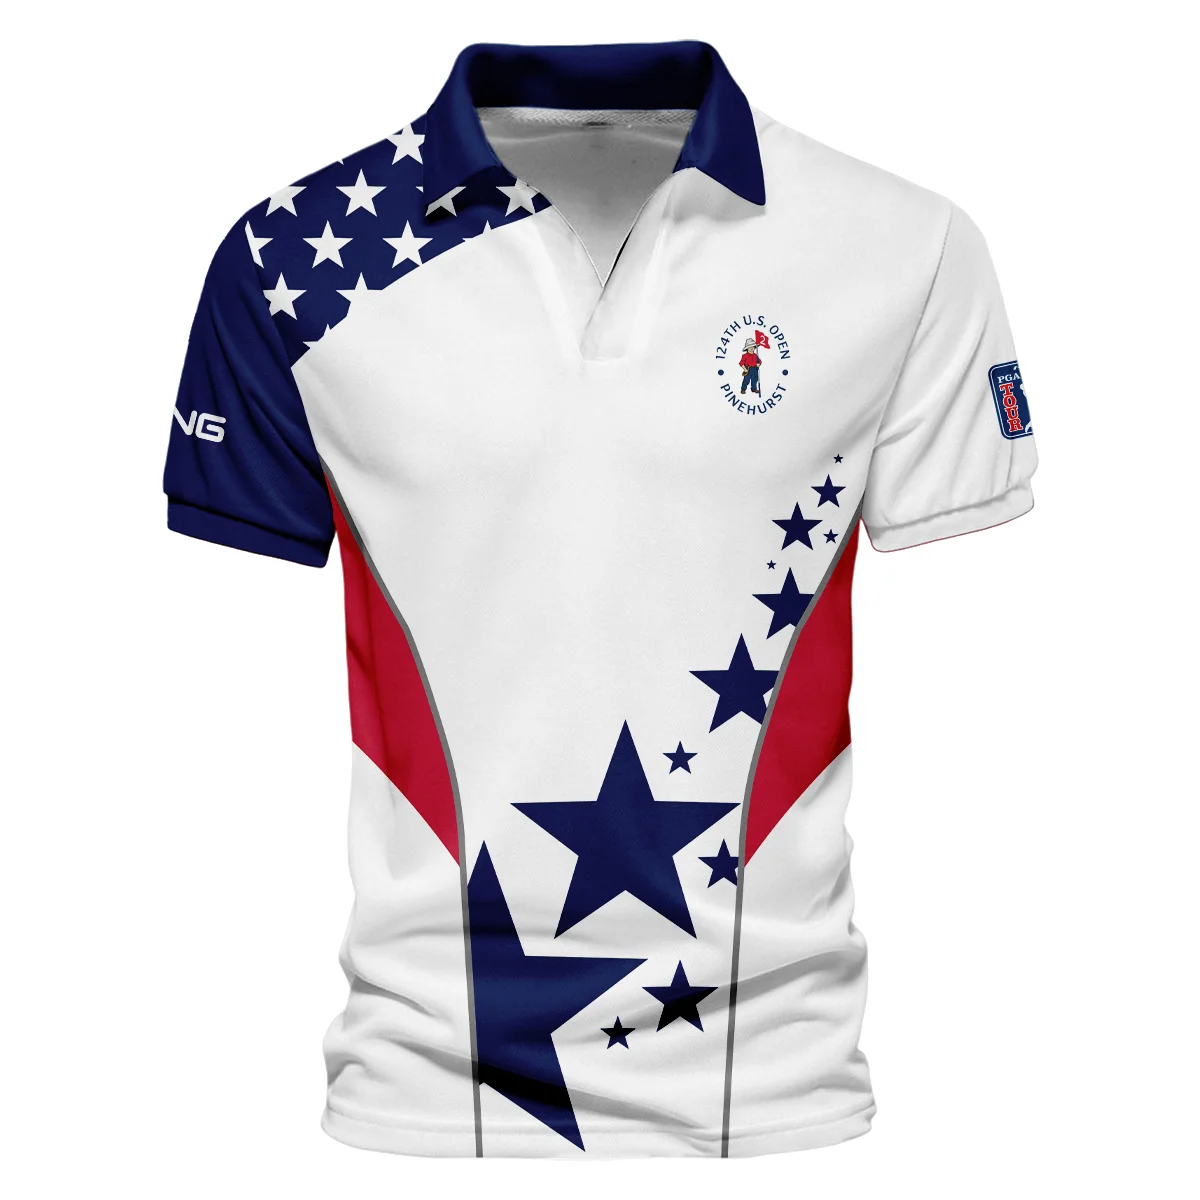 124th U.S. Open Pinehurst Ping Stars US Flag White Blue Vneck Polo Shirt Style Classic Polo Shirt For Men